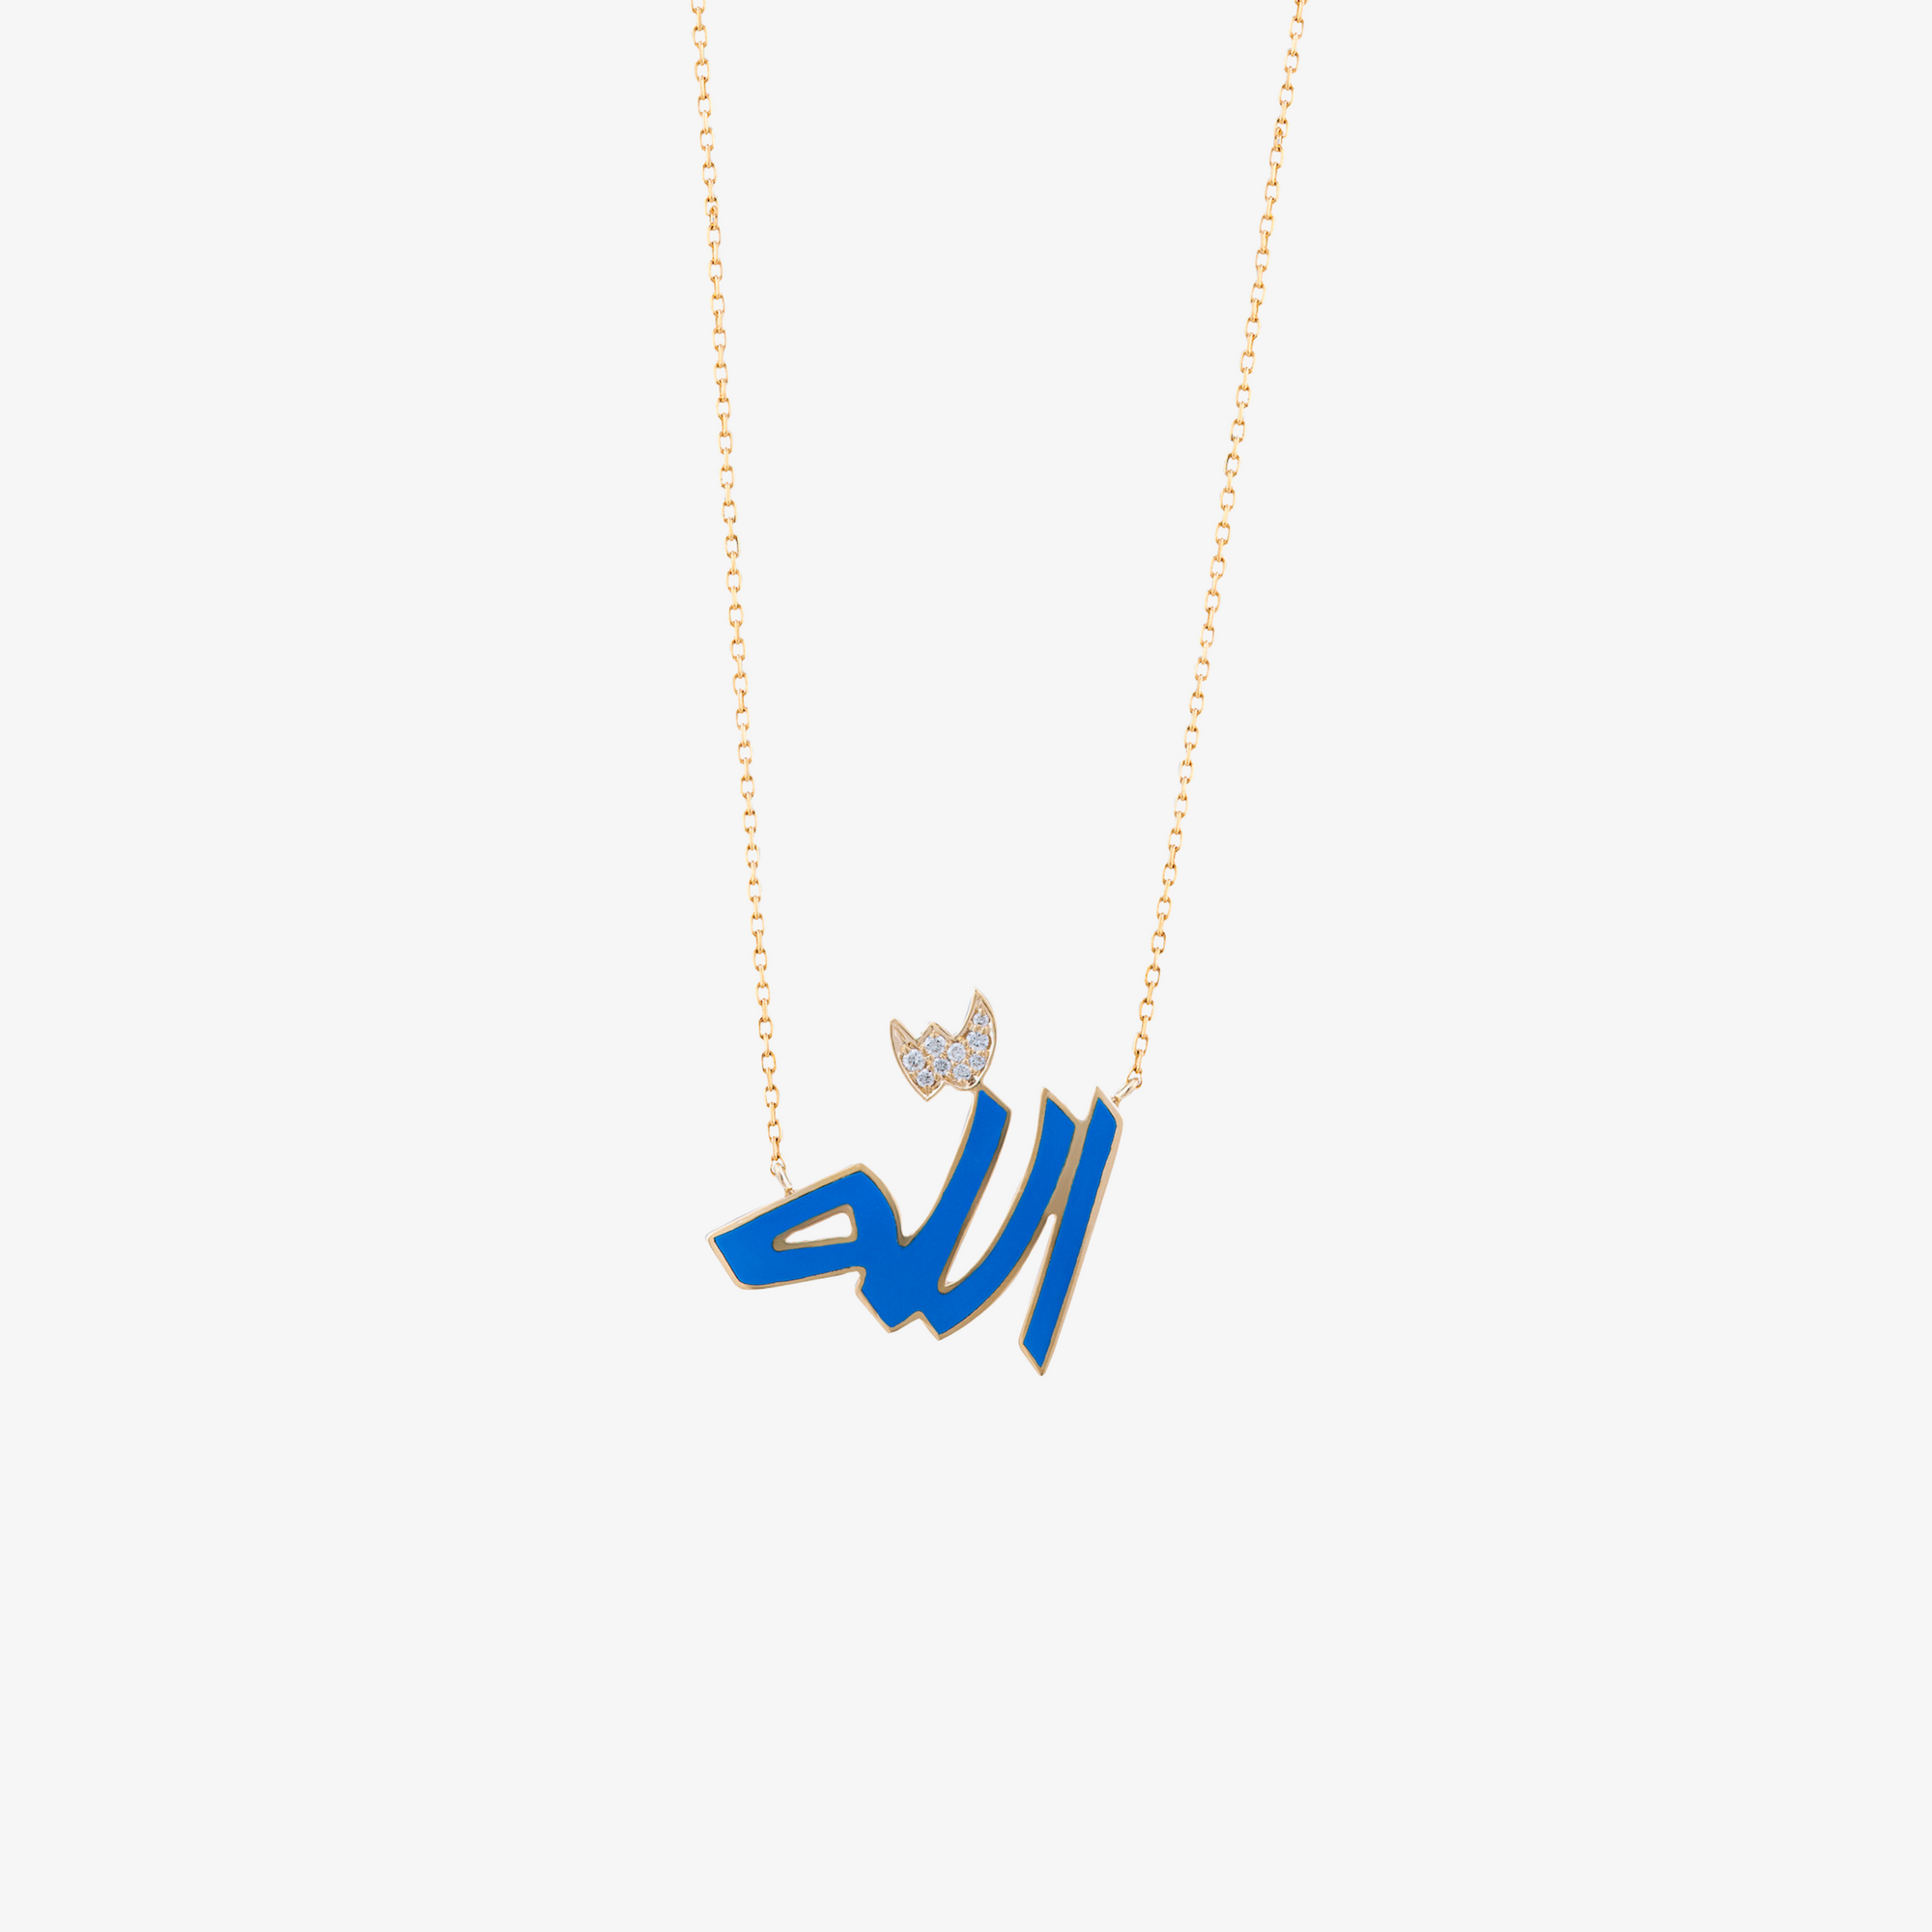 OULA - Gold & Enamel "Allah" Necklace